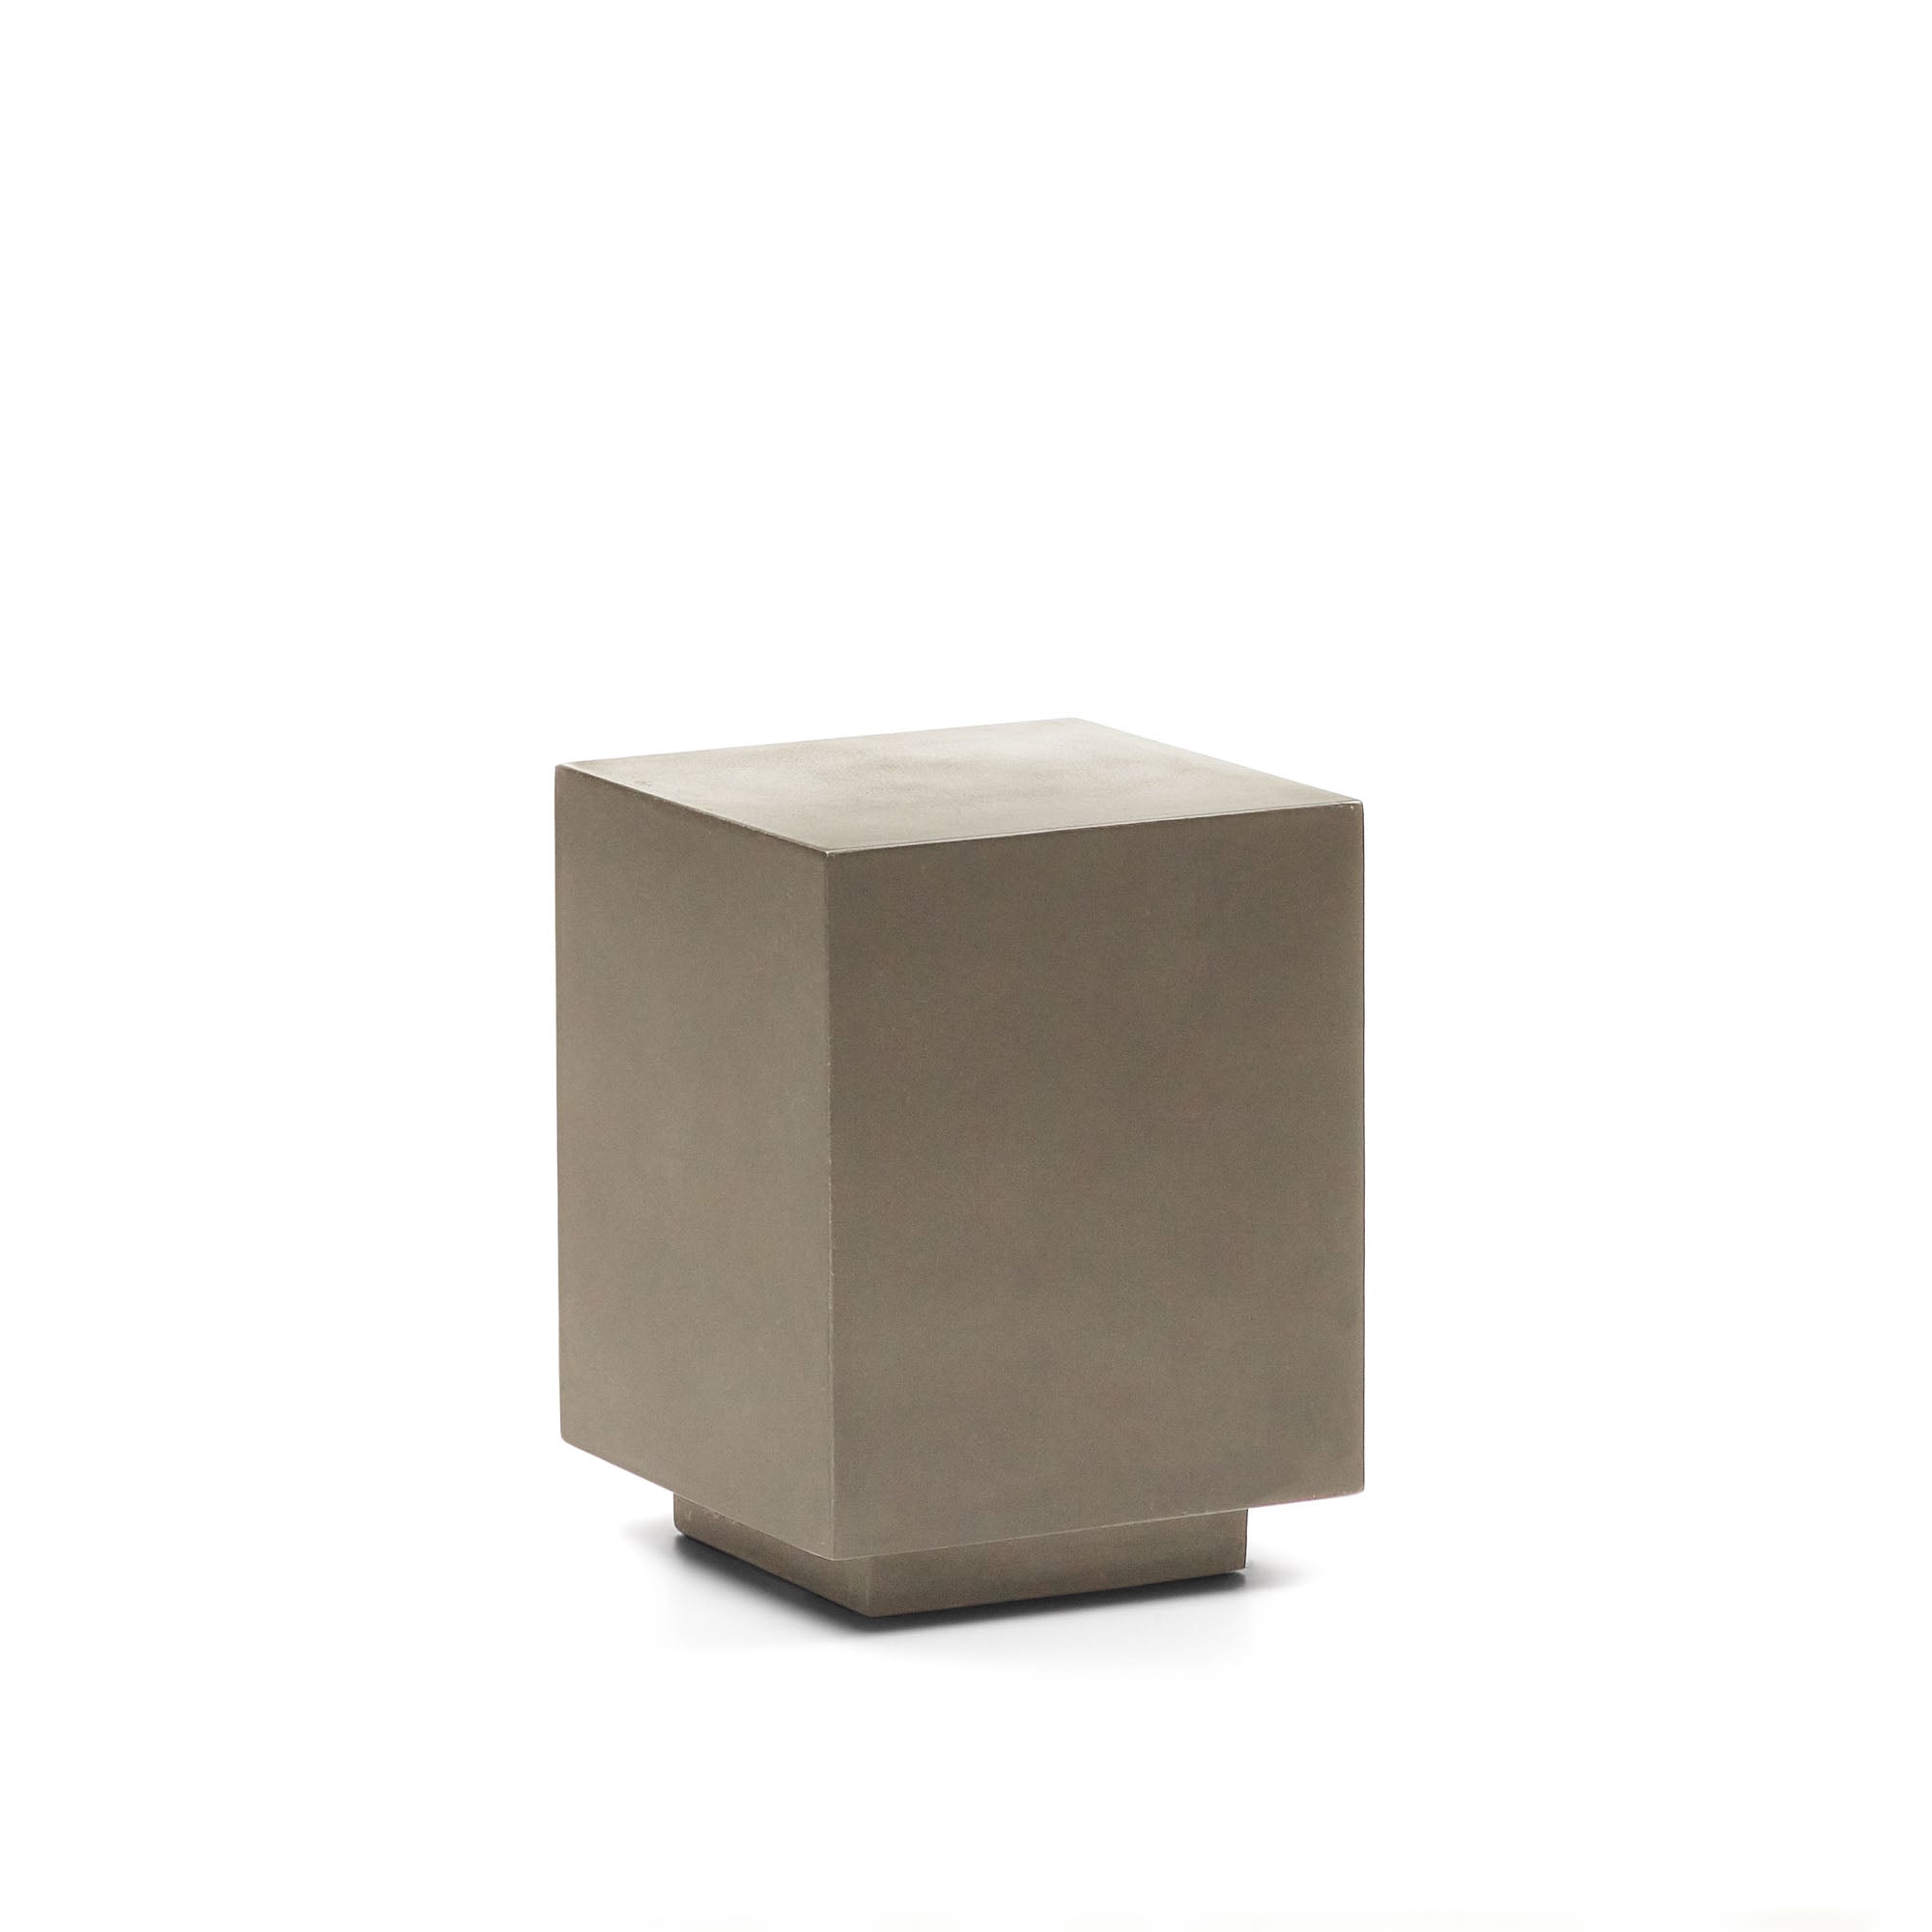 Rustella cement kisasztal, 35 x 35 cm, 35 x 35 cm